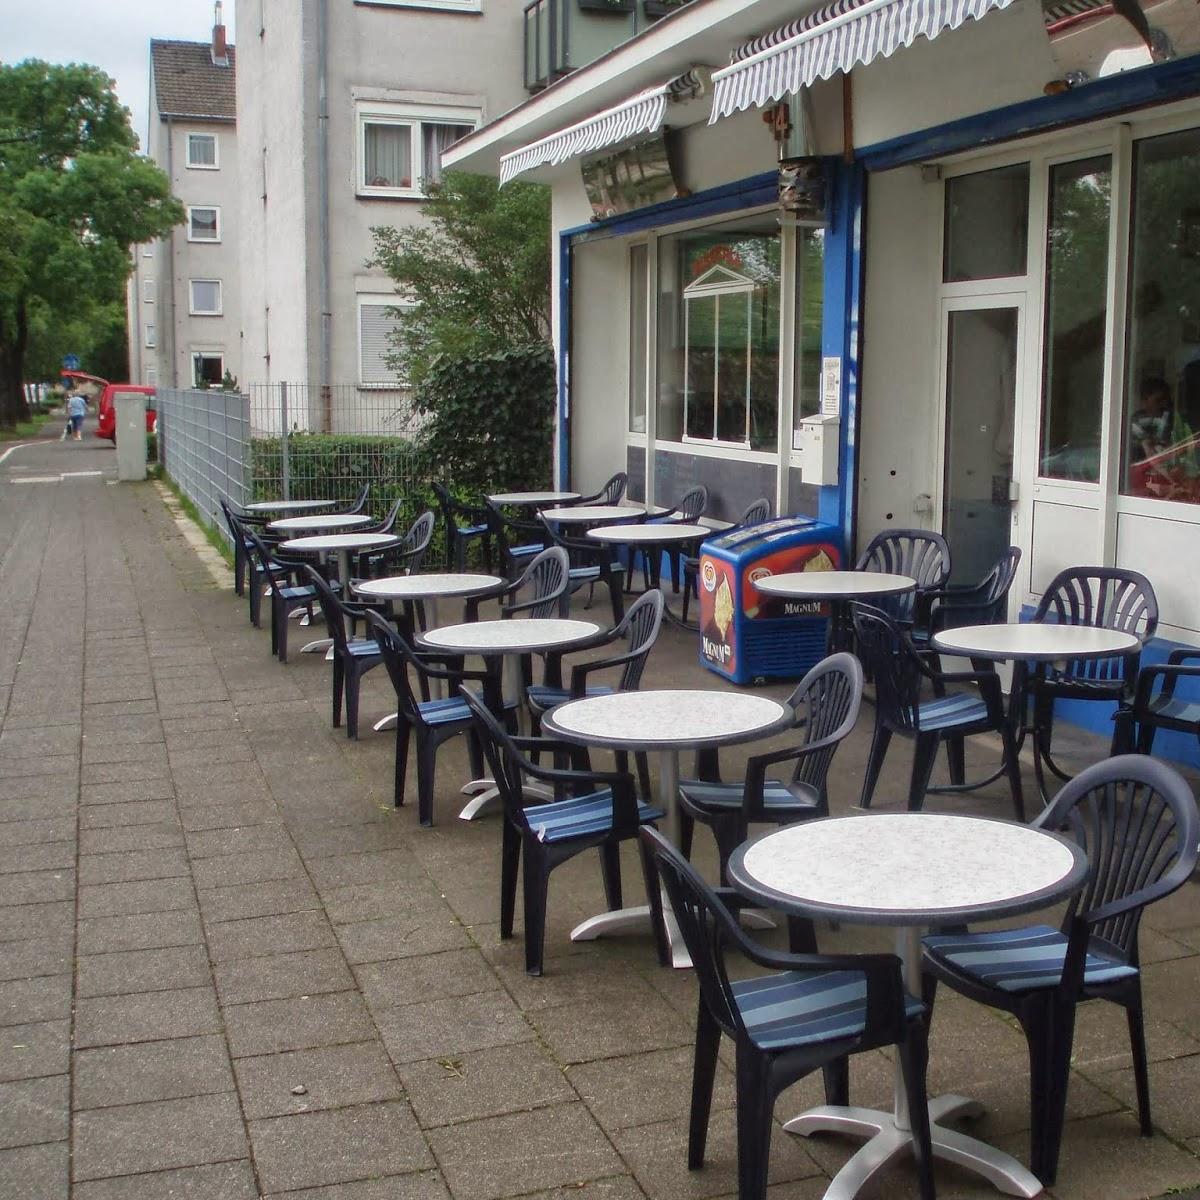 Restaurant "Akti Grill" in Köln